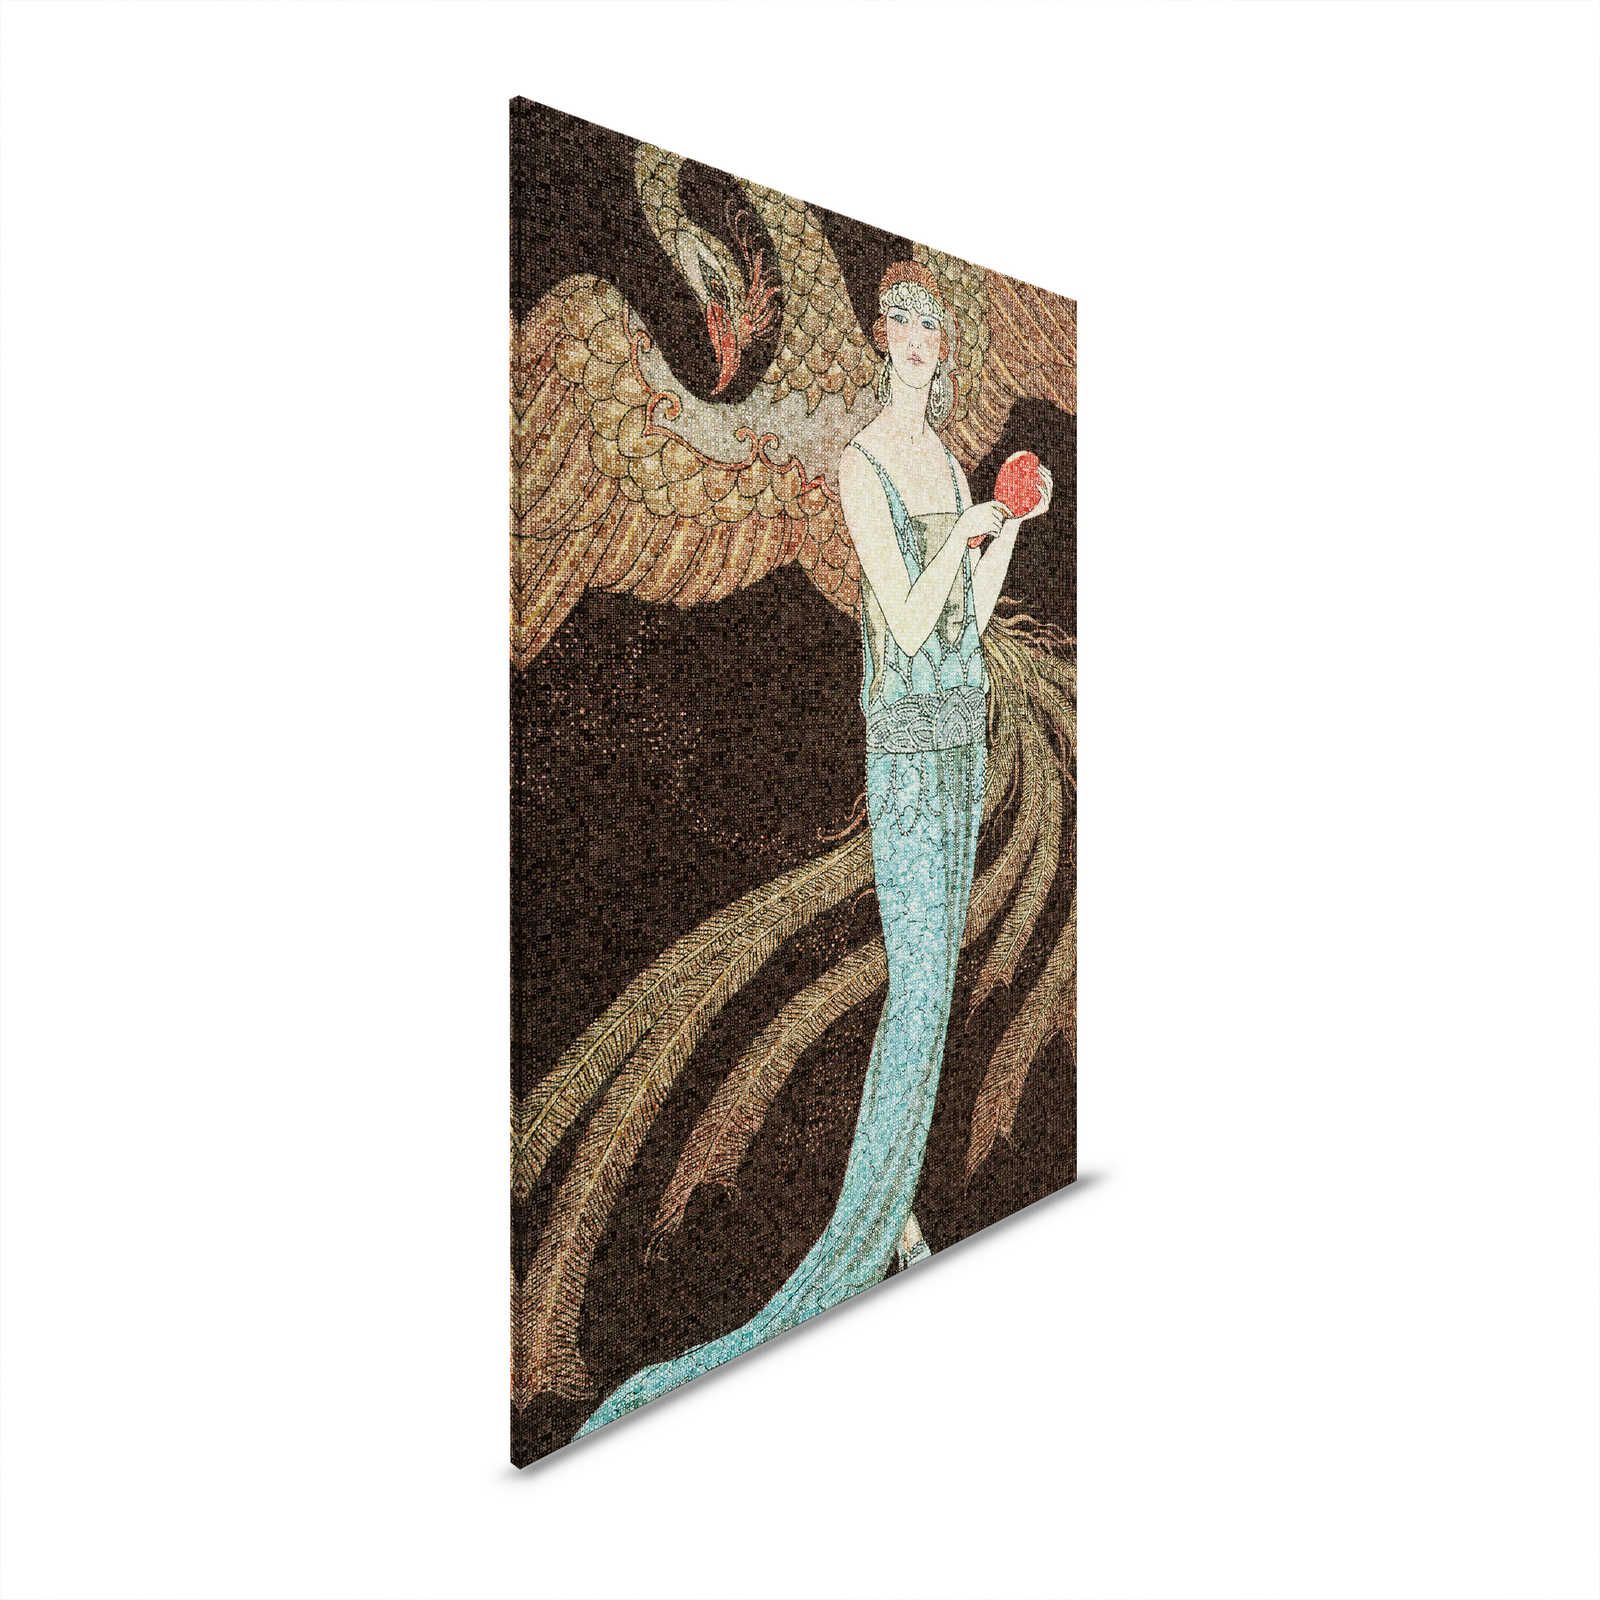 Scala 1 - Cuadro en lienzo Mosaico Fénix y Mujer motivo Art Déco - 0,60 m x 0,90 m
